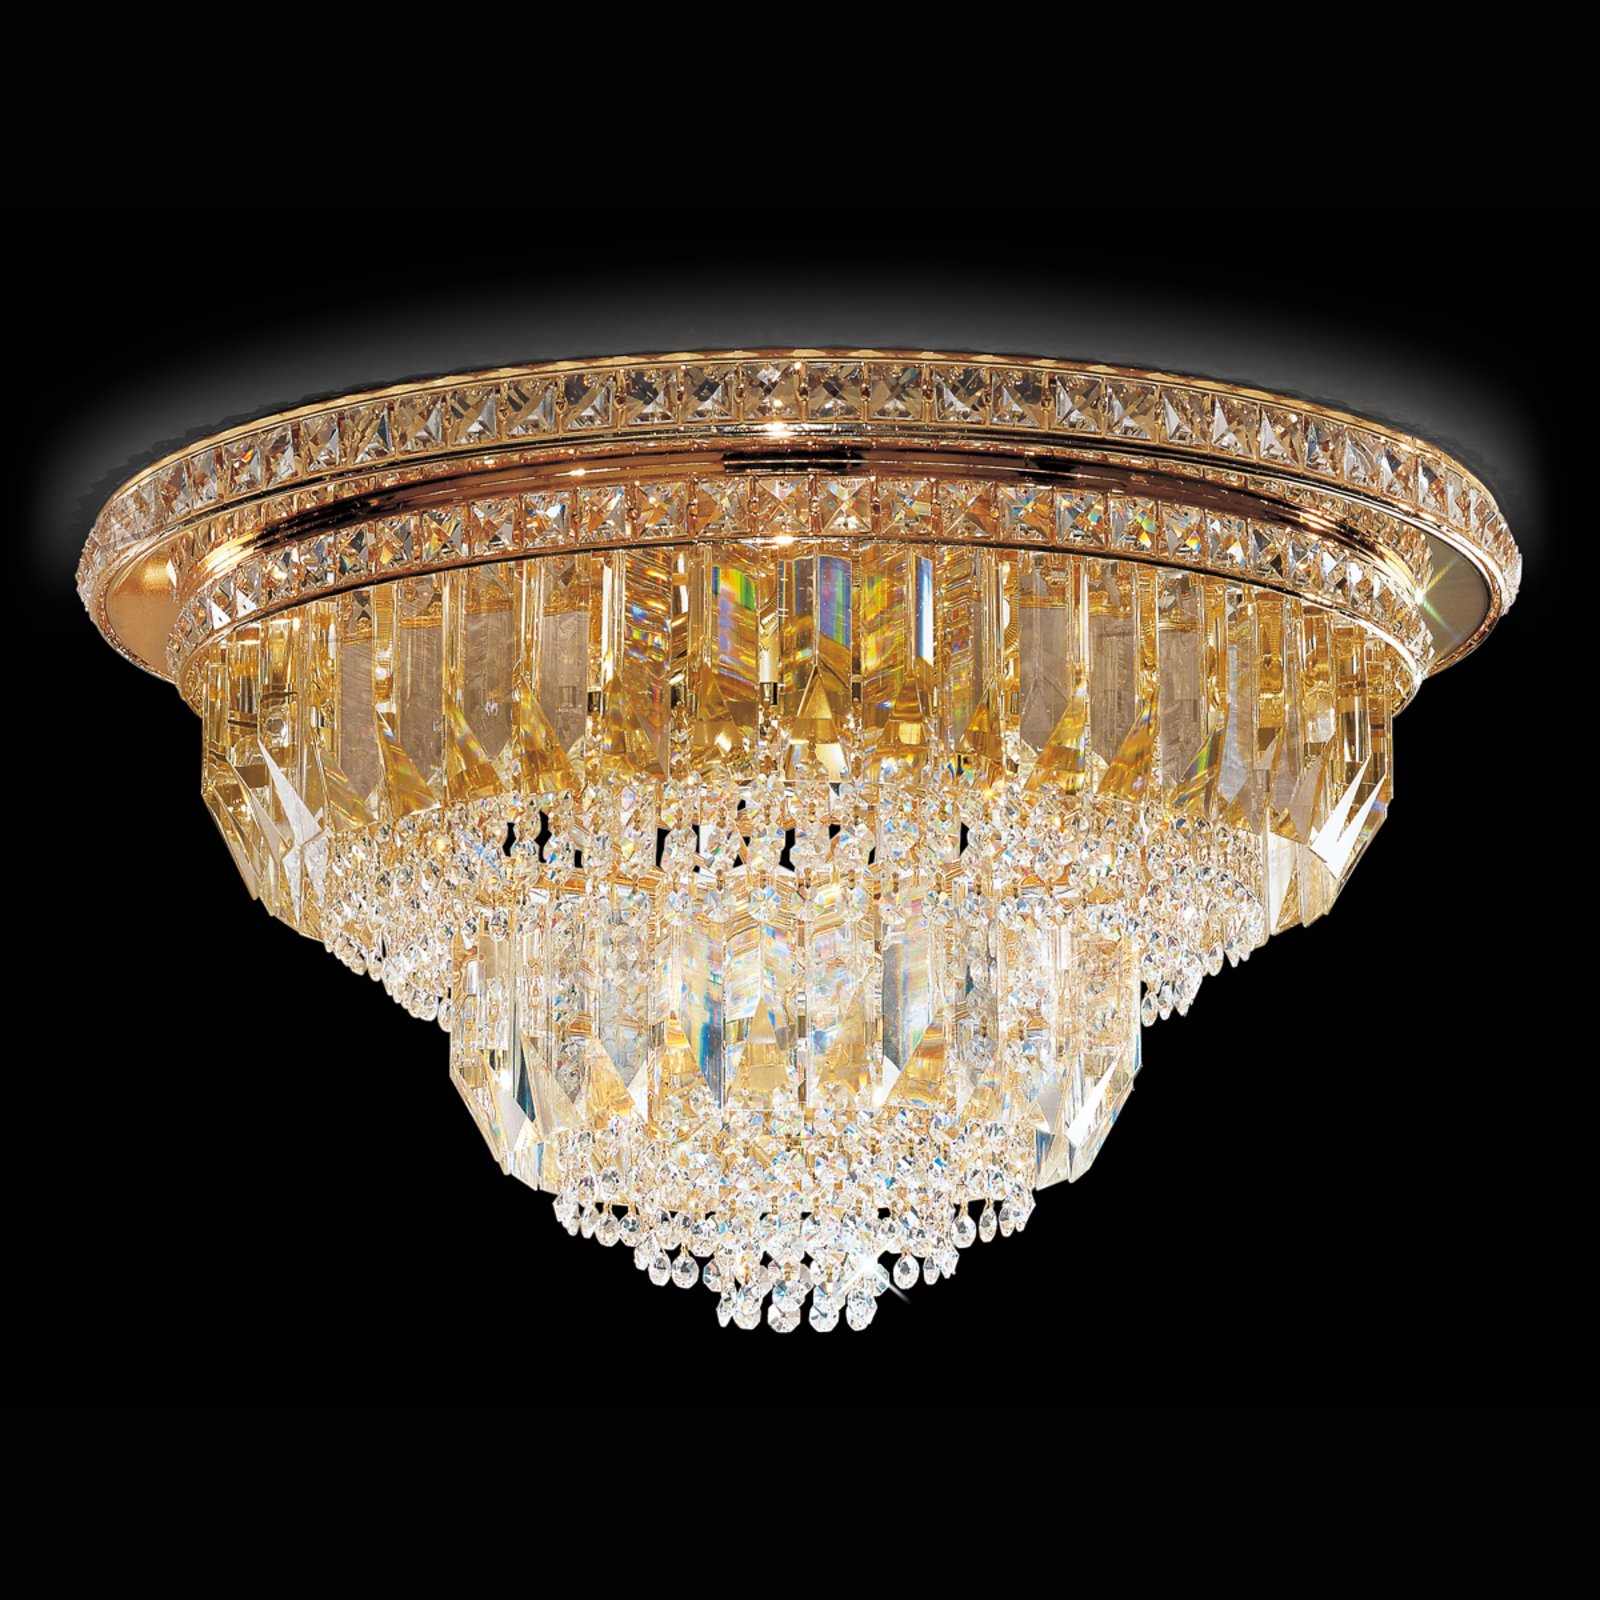 Cristalli taklampe, 60 cm i gull